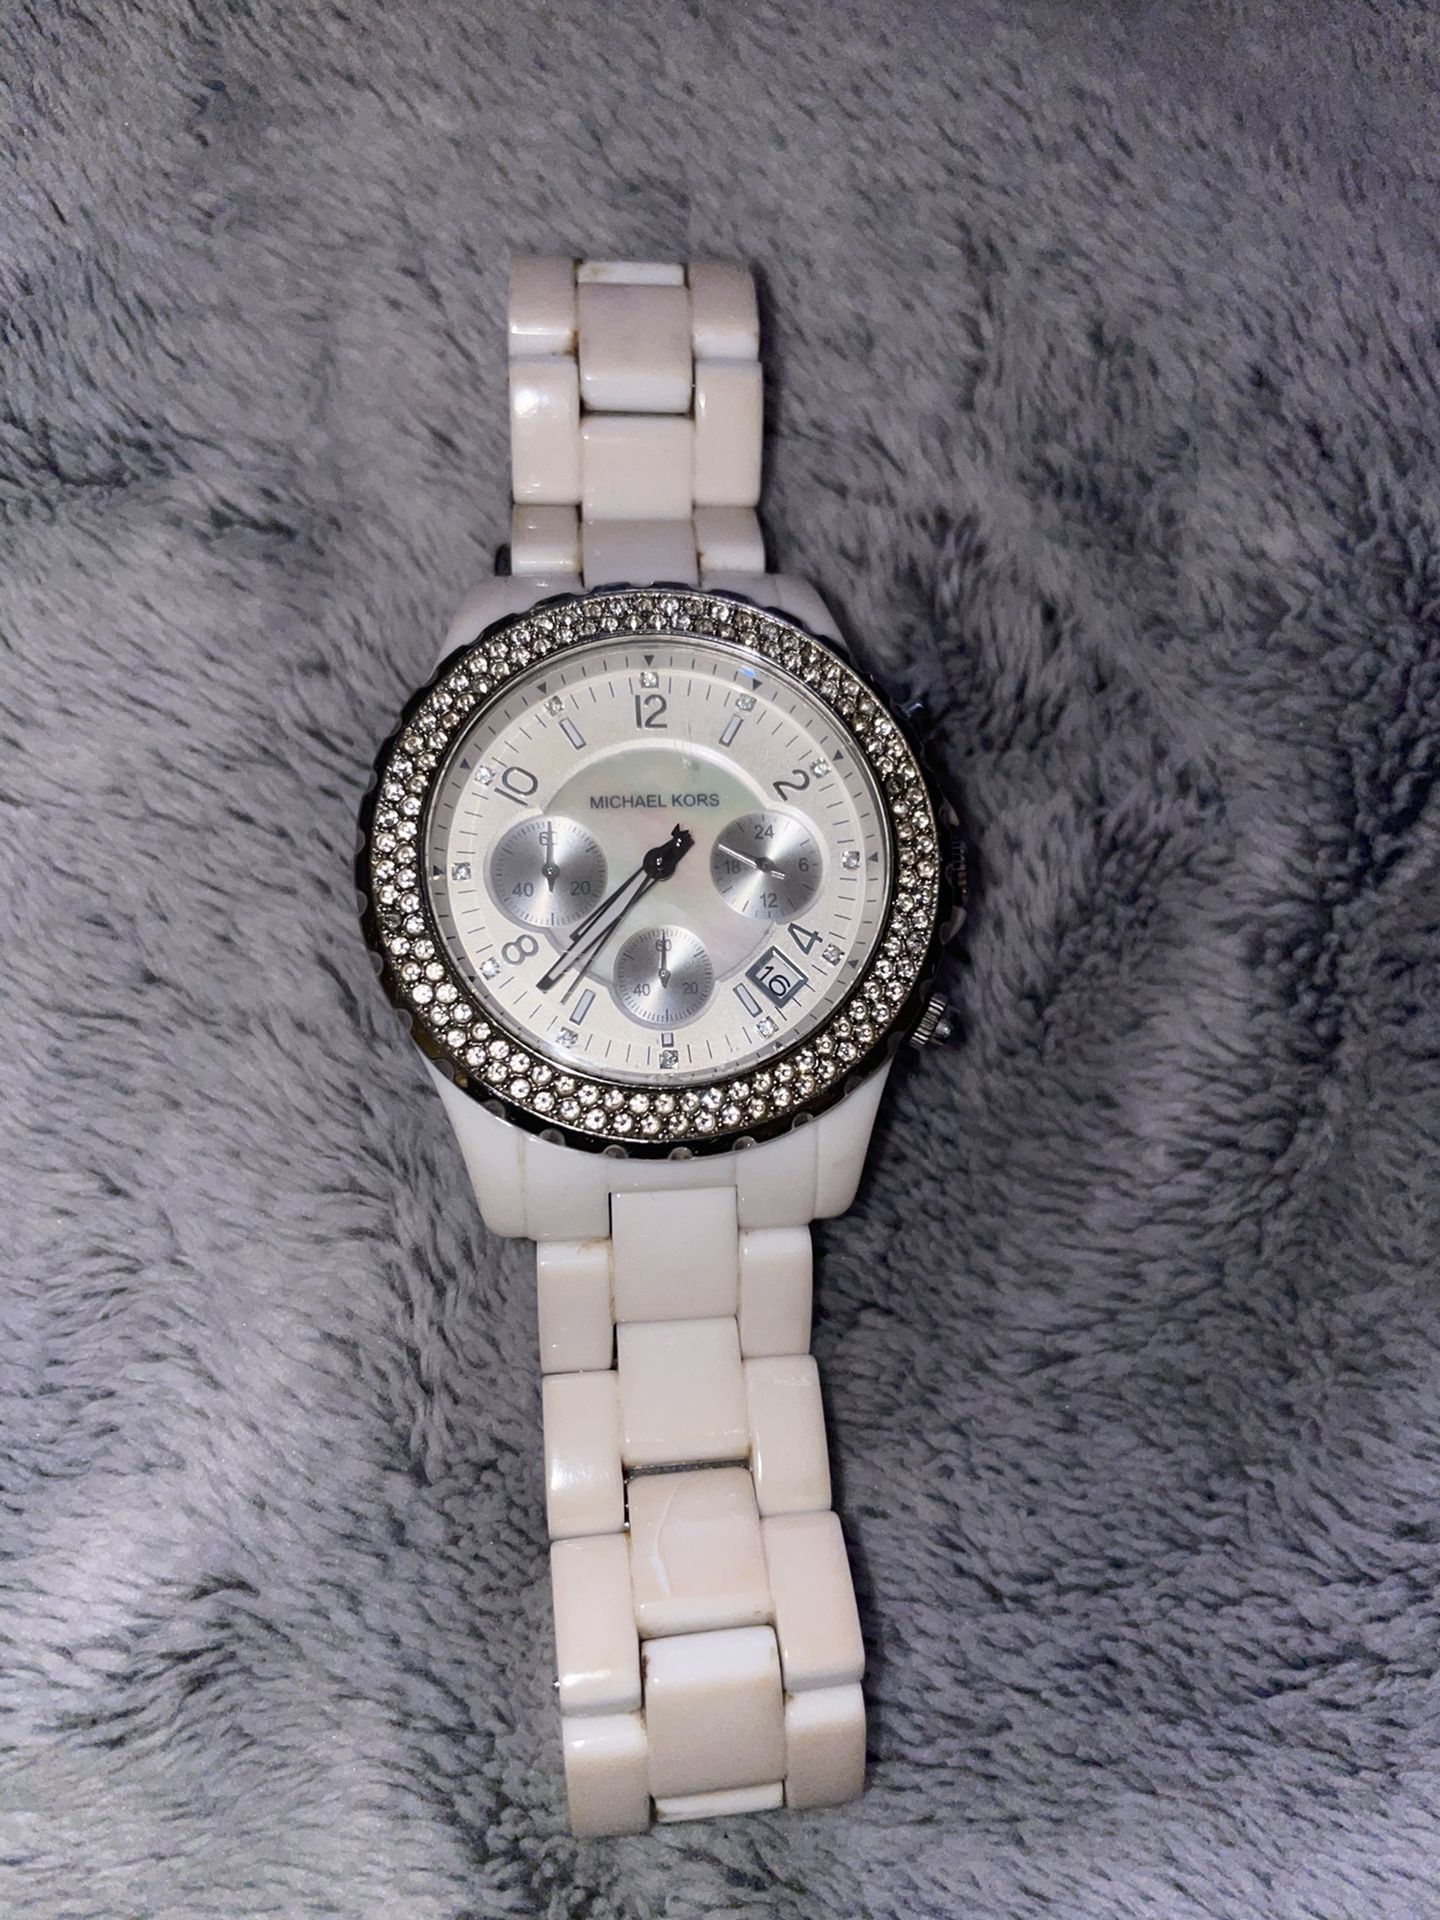 Michael Kors White Chronograph Watch